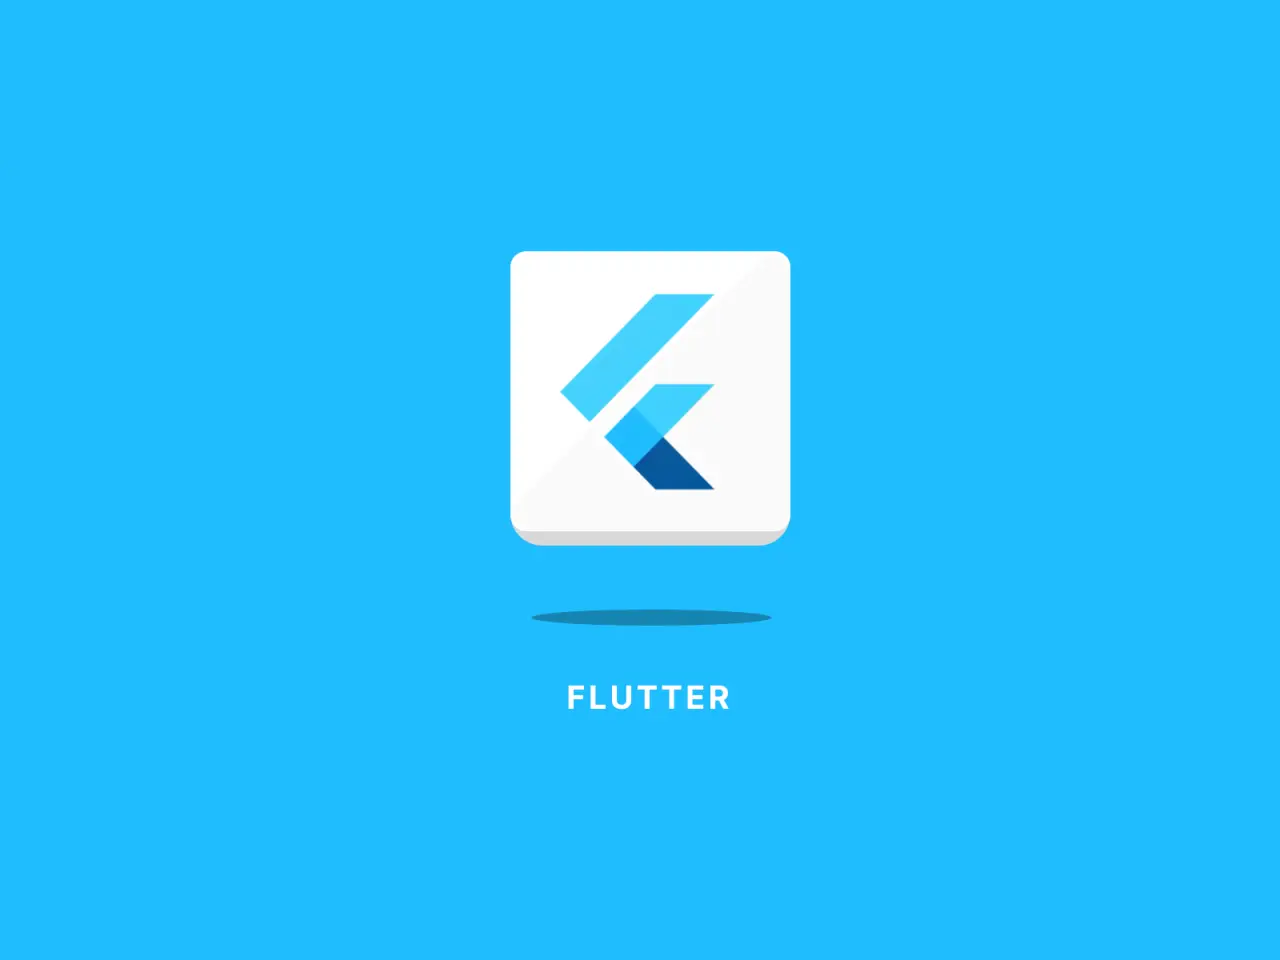 Flutter app development services related blog